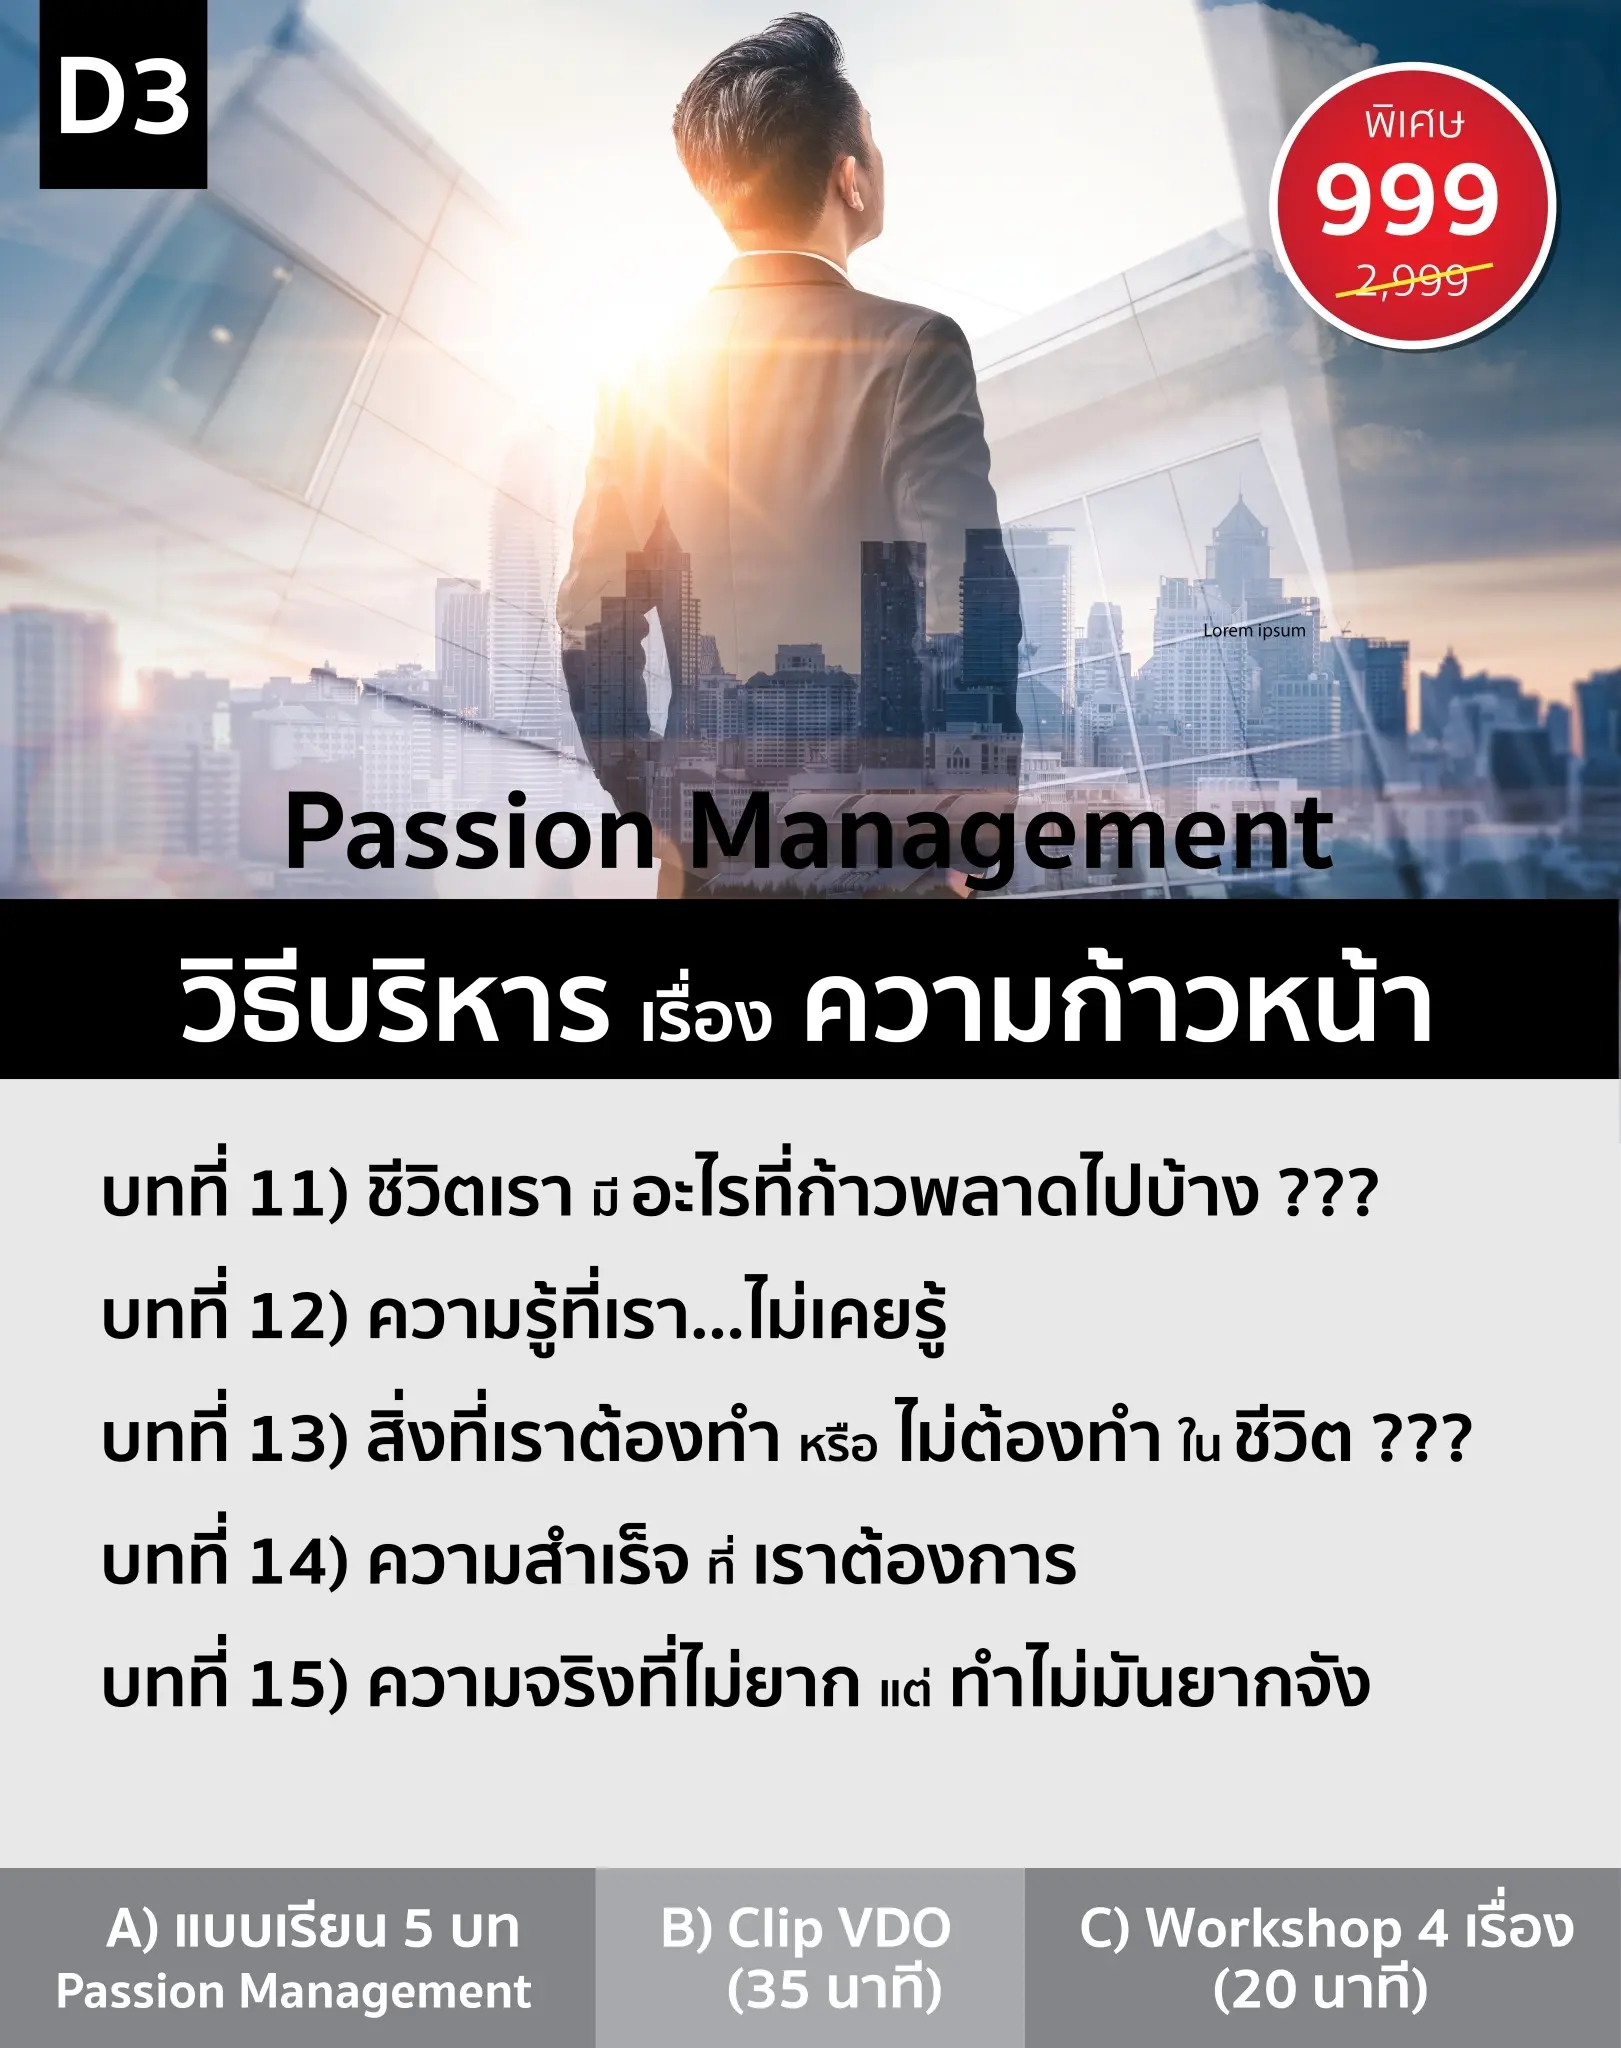 D3 Passion Management วิธีบริหาร เรื่อง ความก้าวหน้า